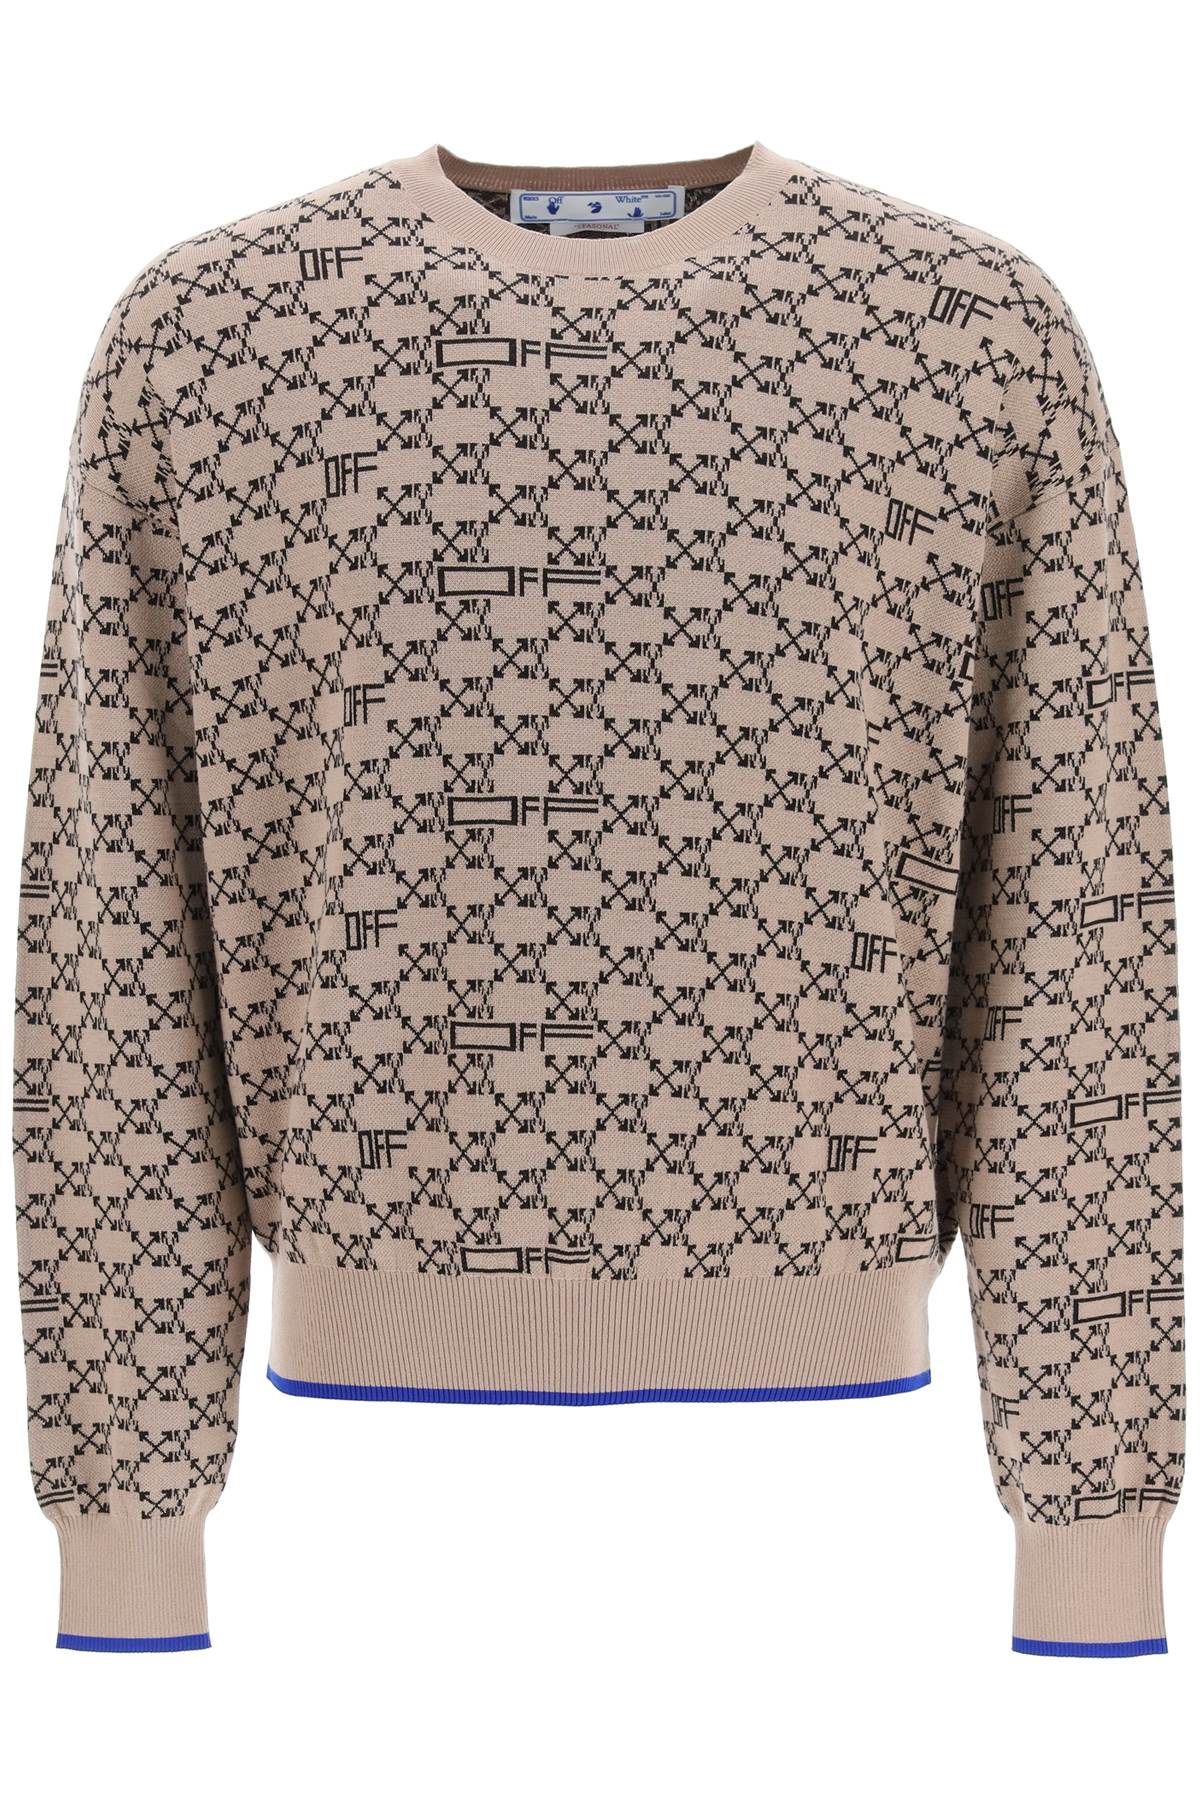 Off-White Monogram Motif Sweater